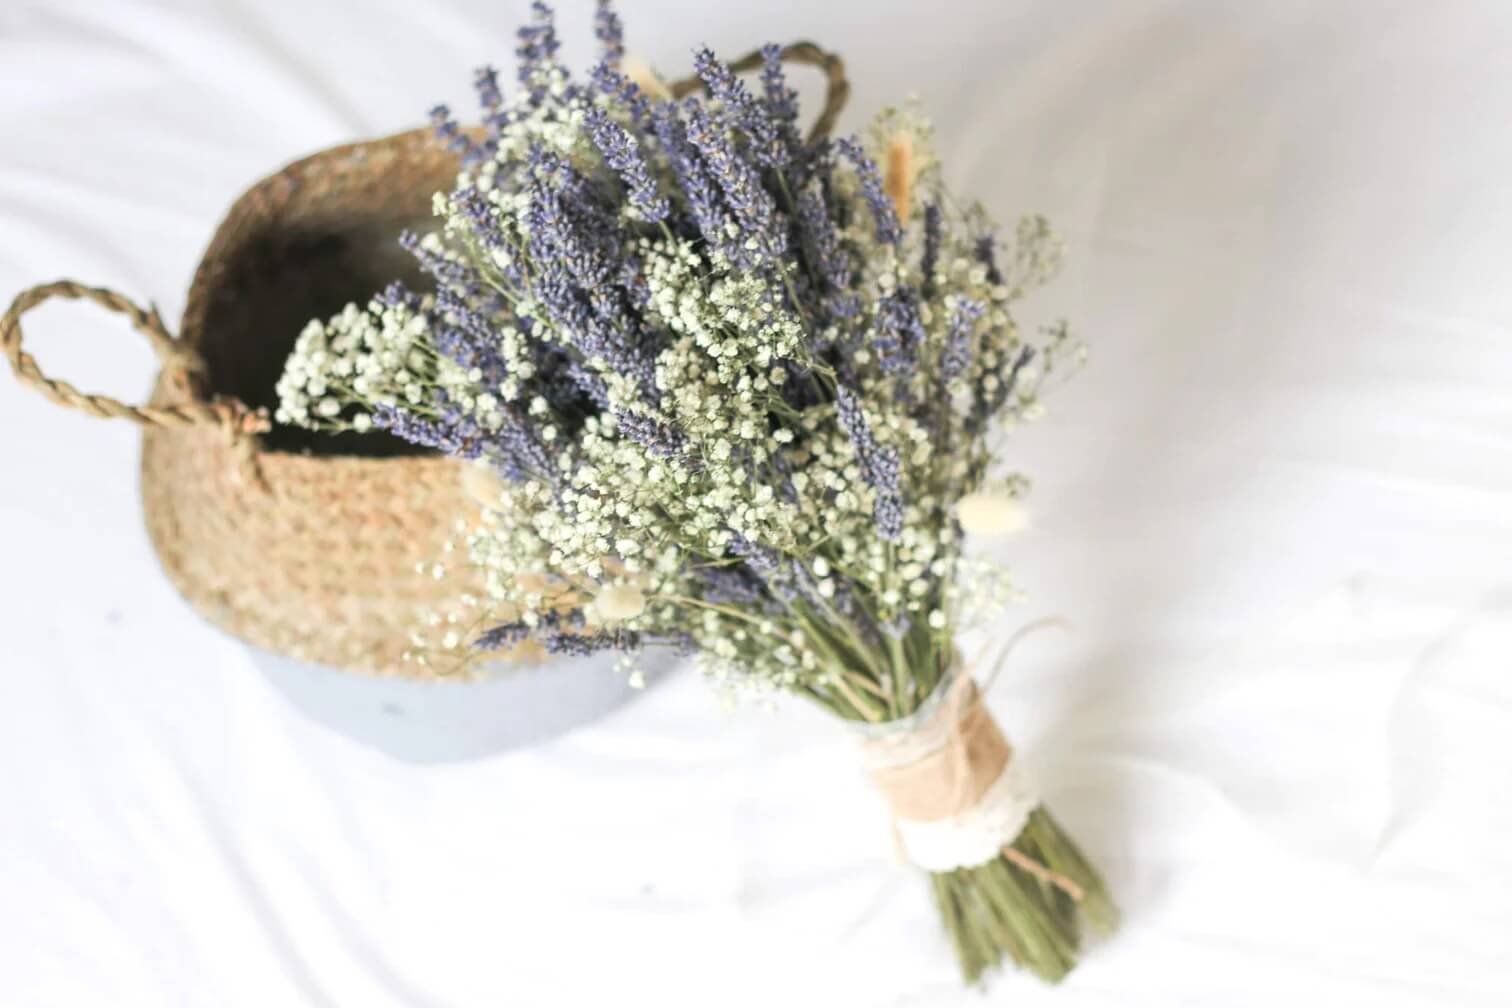 Lavender and baby's breath retro flower arrangements by Hidden Botanics.